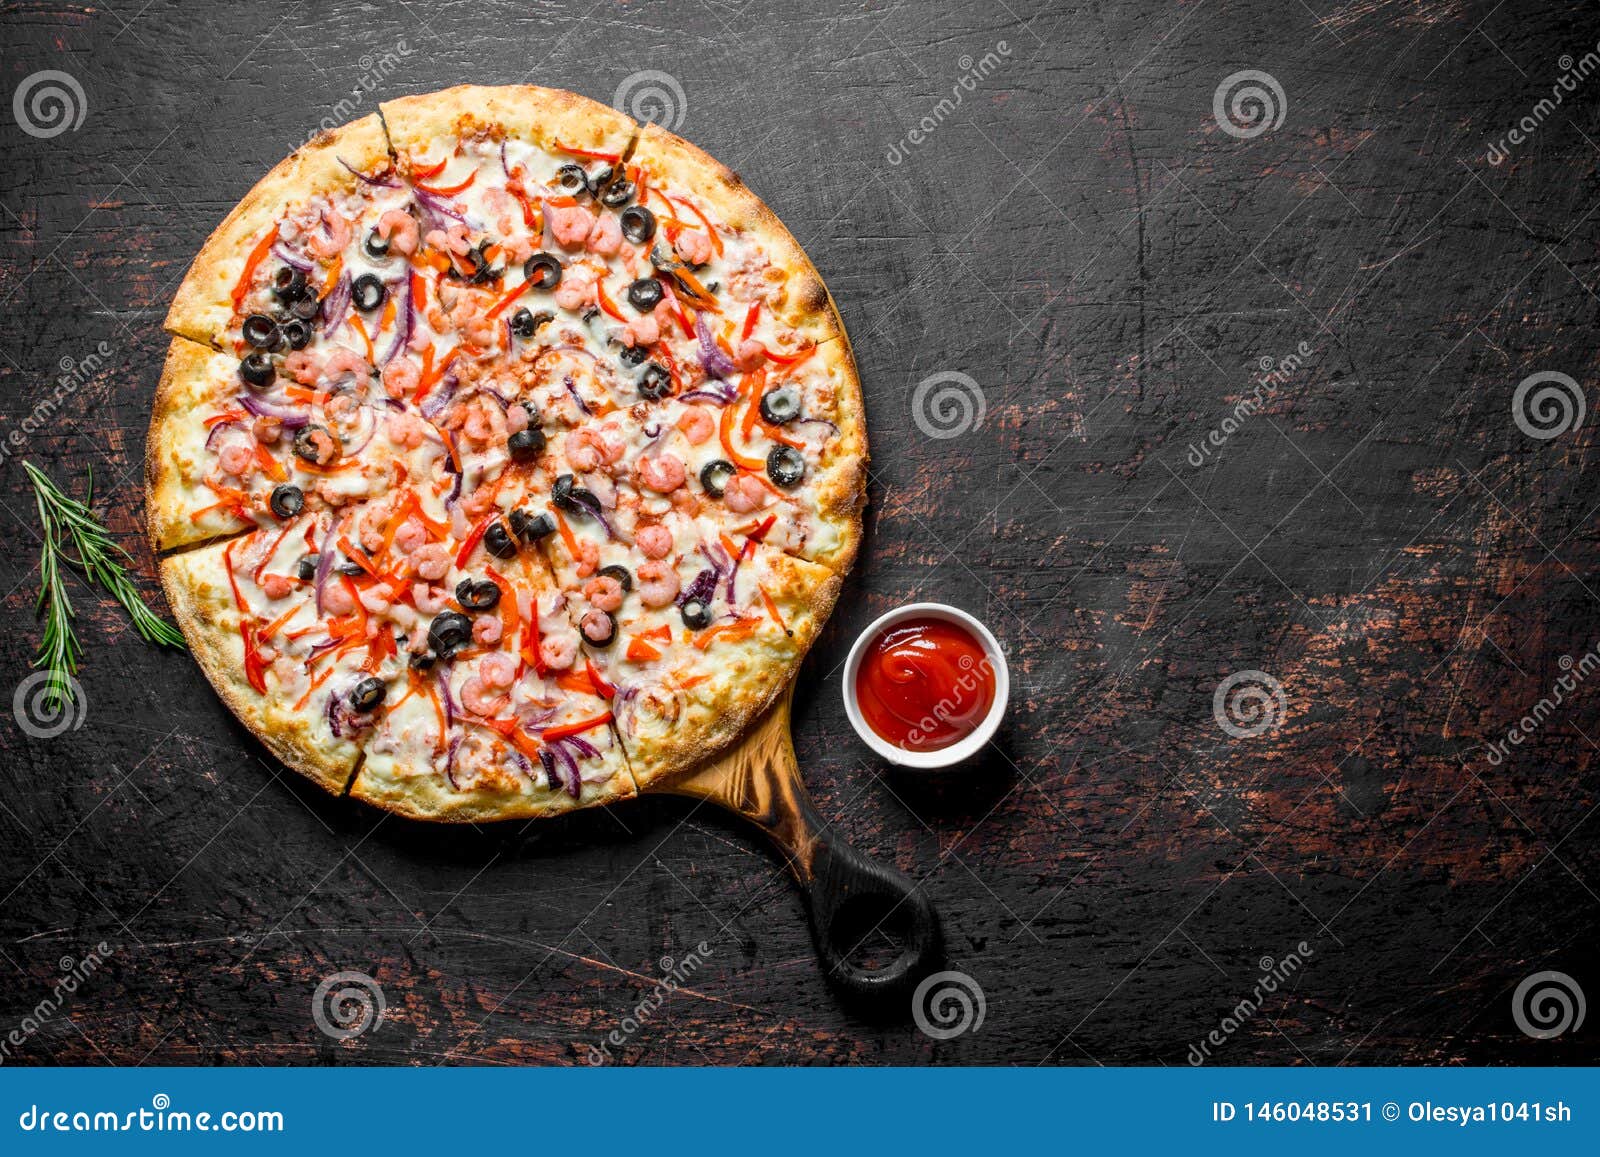 фрутти ди маре пицца состав фото 102